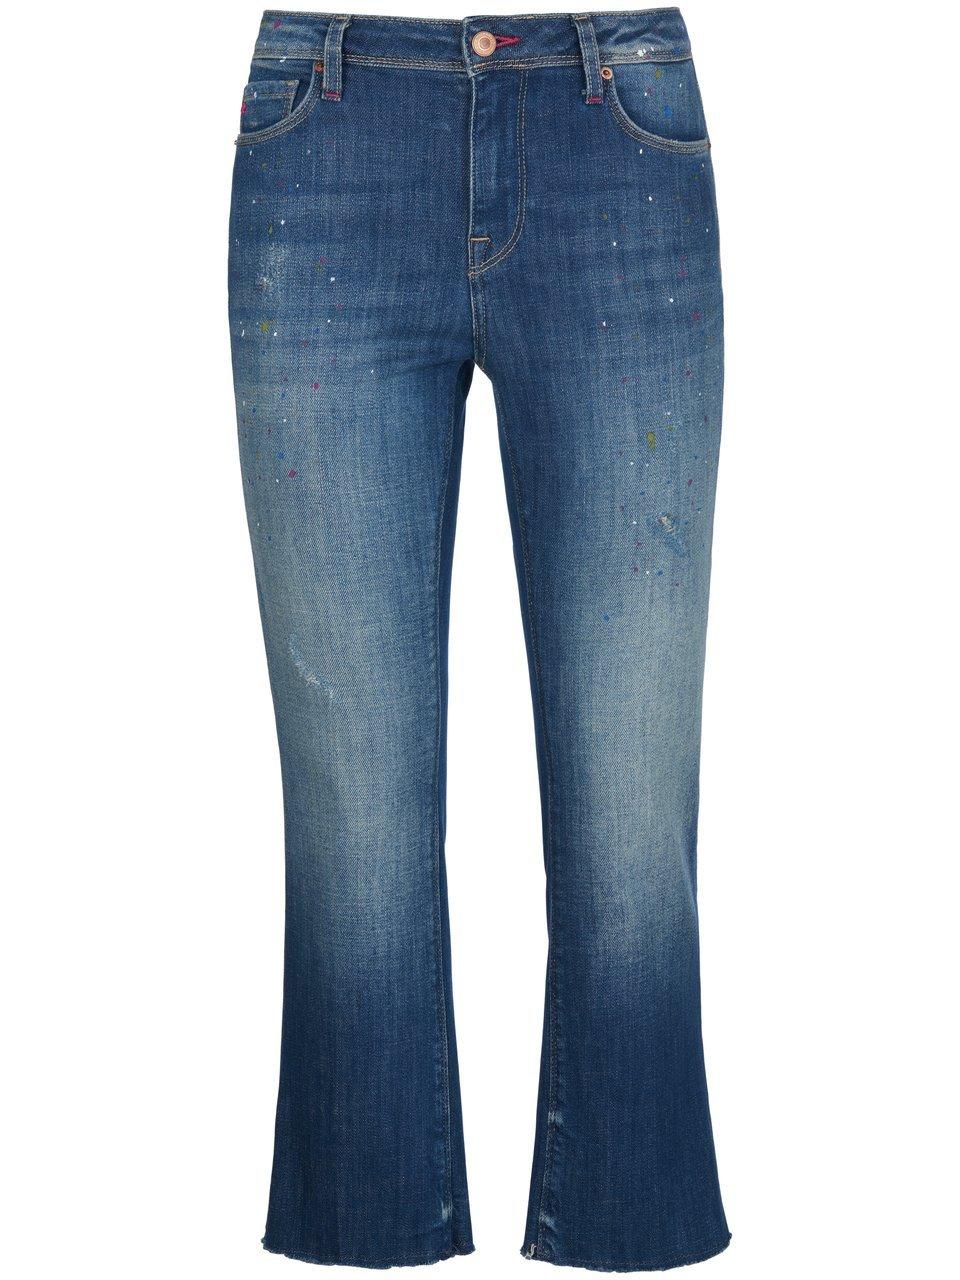 Enkellange jeans model Penny Van Raffaello Rossi denim